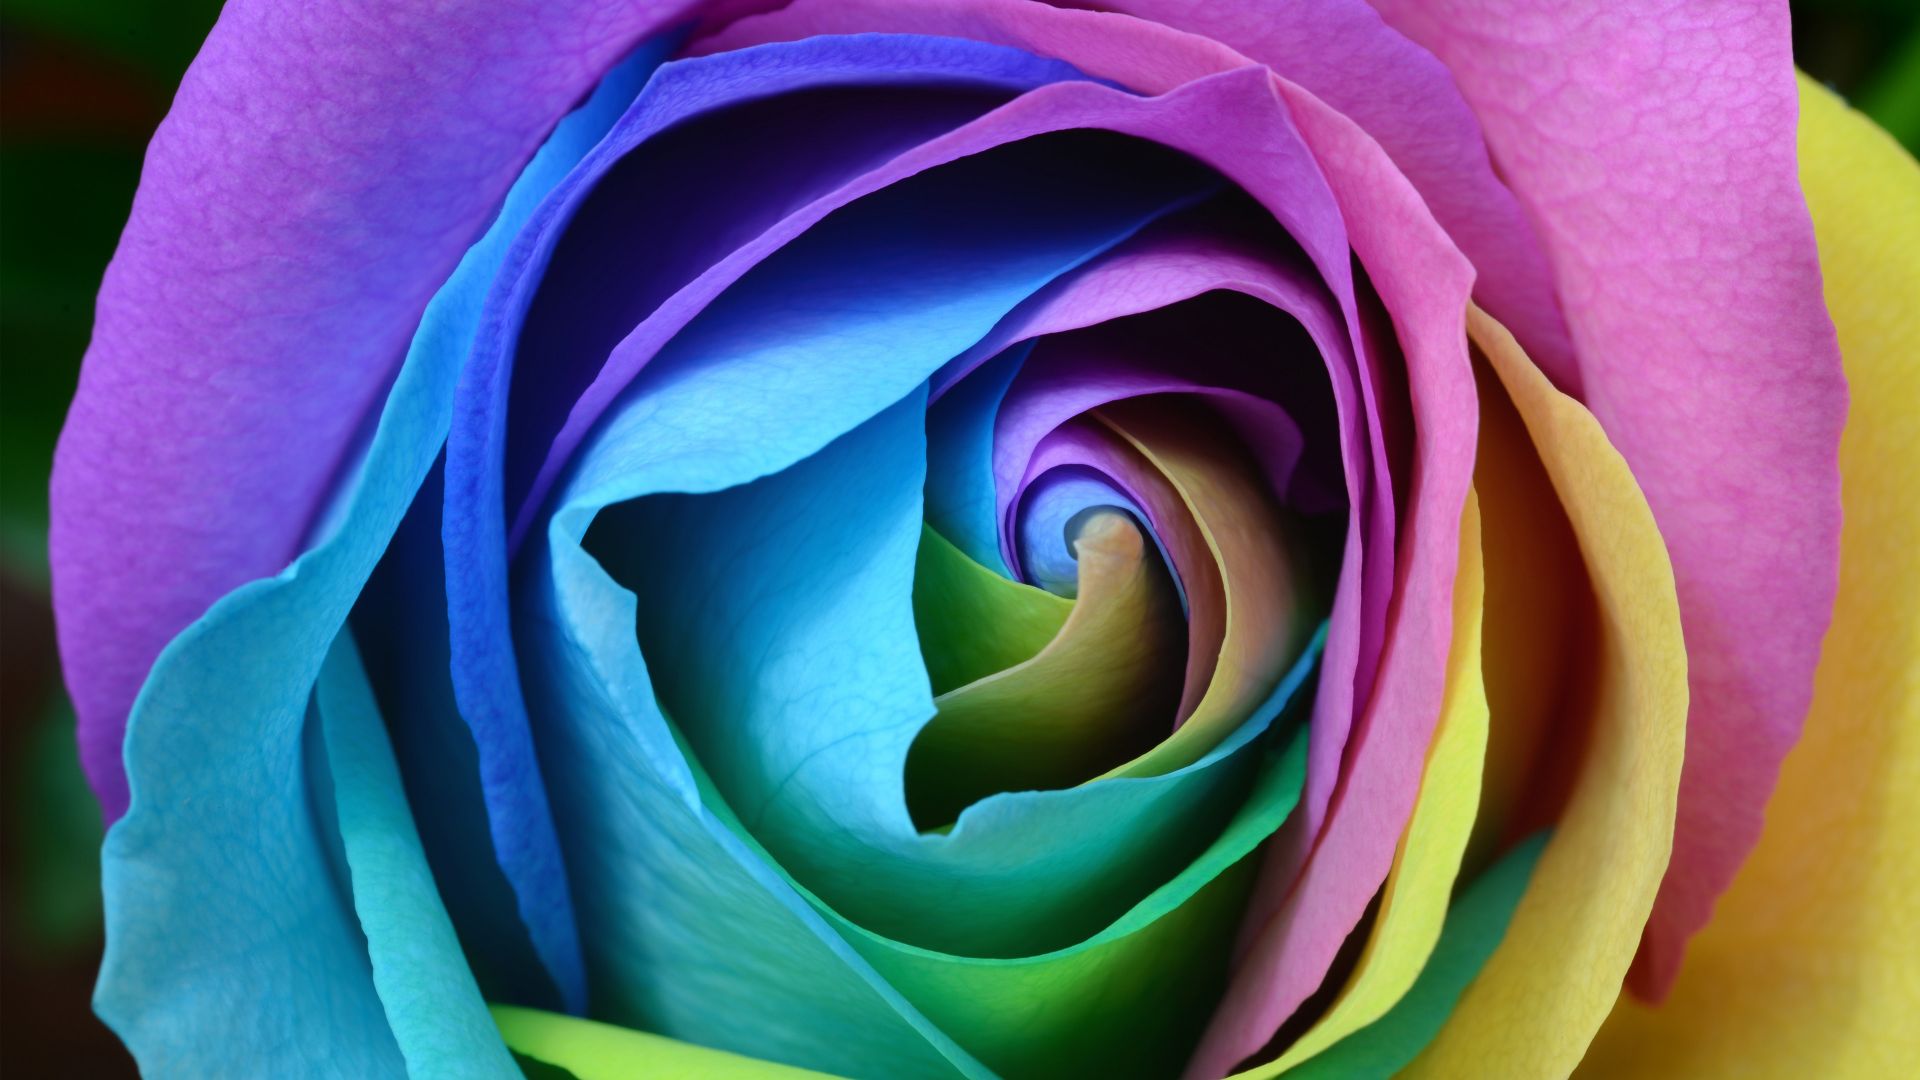 Wallpaper Colorful, rose, flower, close up, 4k